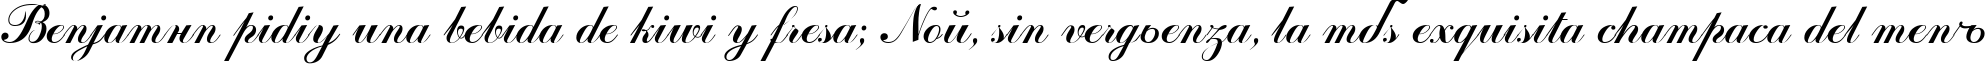 Пример написания шрифтом Odessa Script Cyr текста на испанском